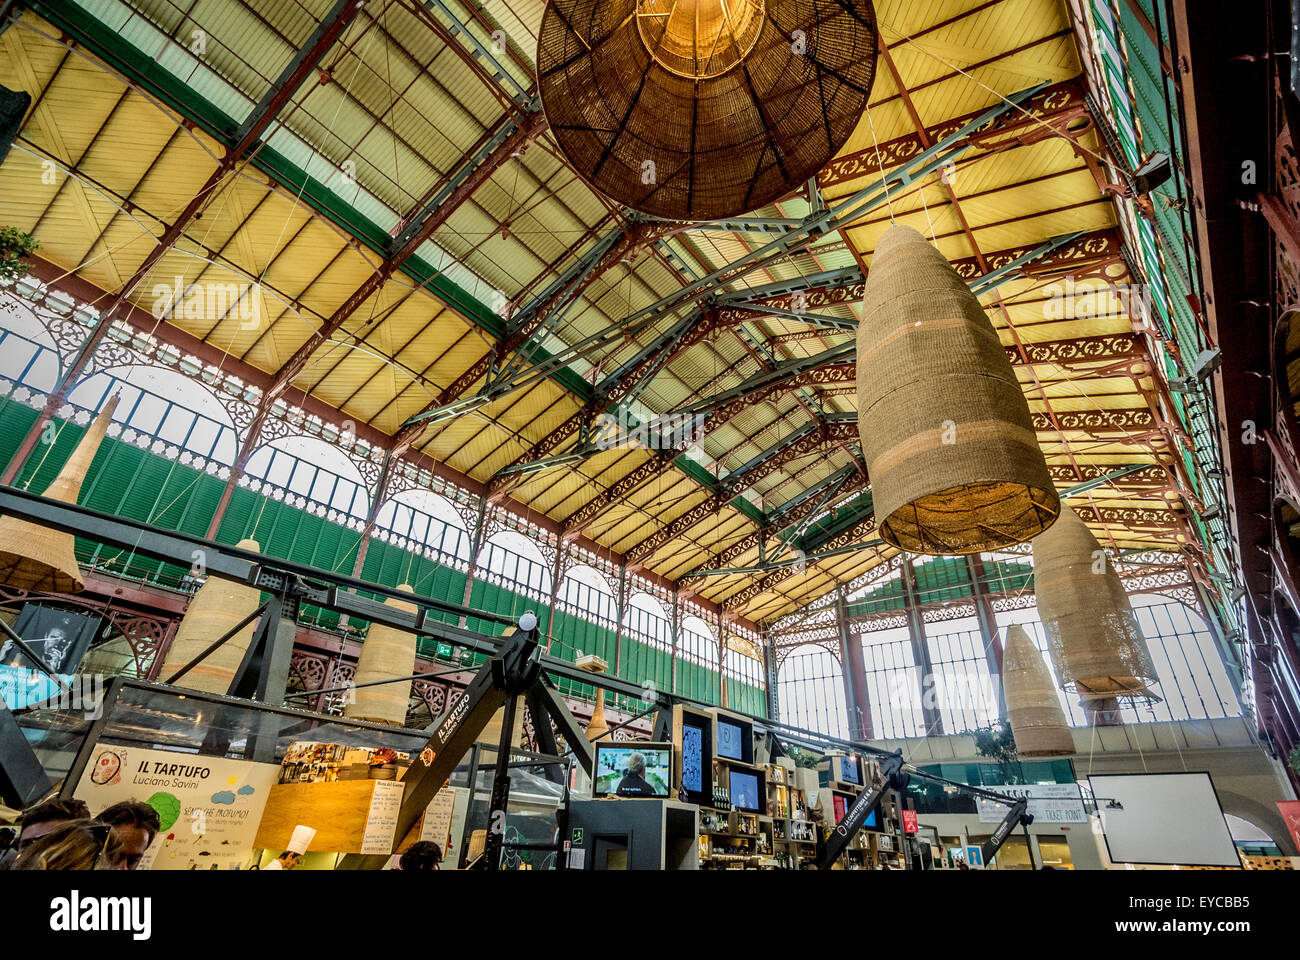 Mercato Centrale indoor market. Florence, Italy. Stock Photo